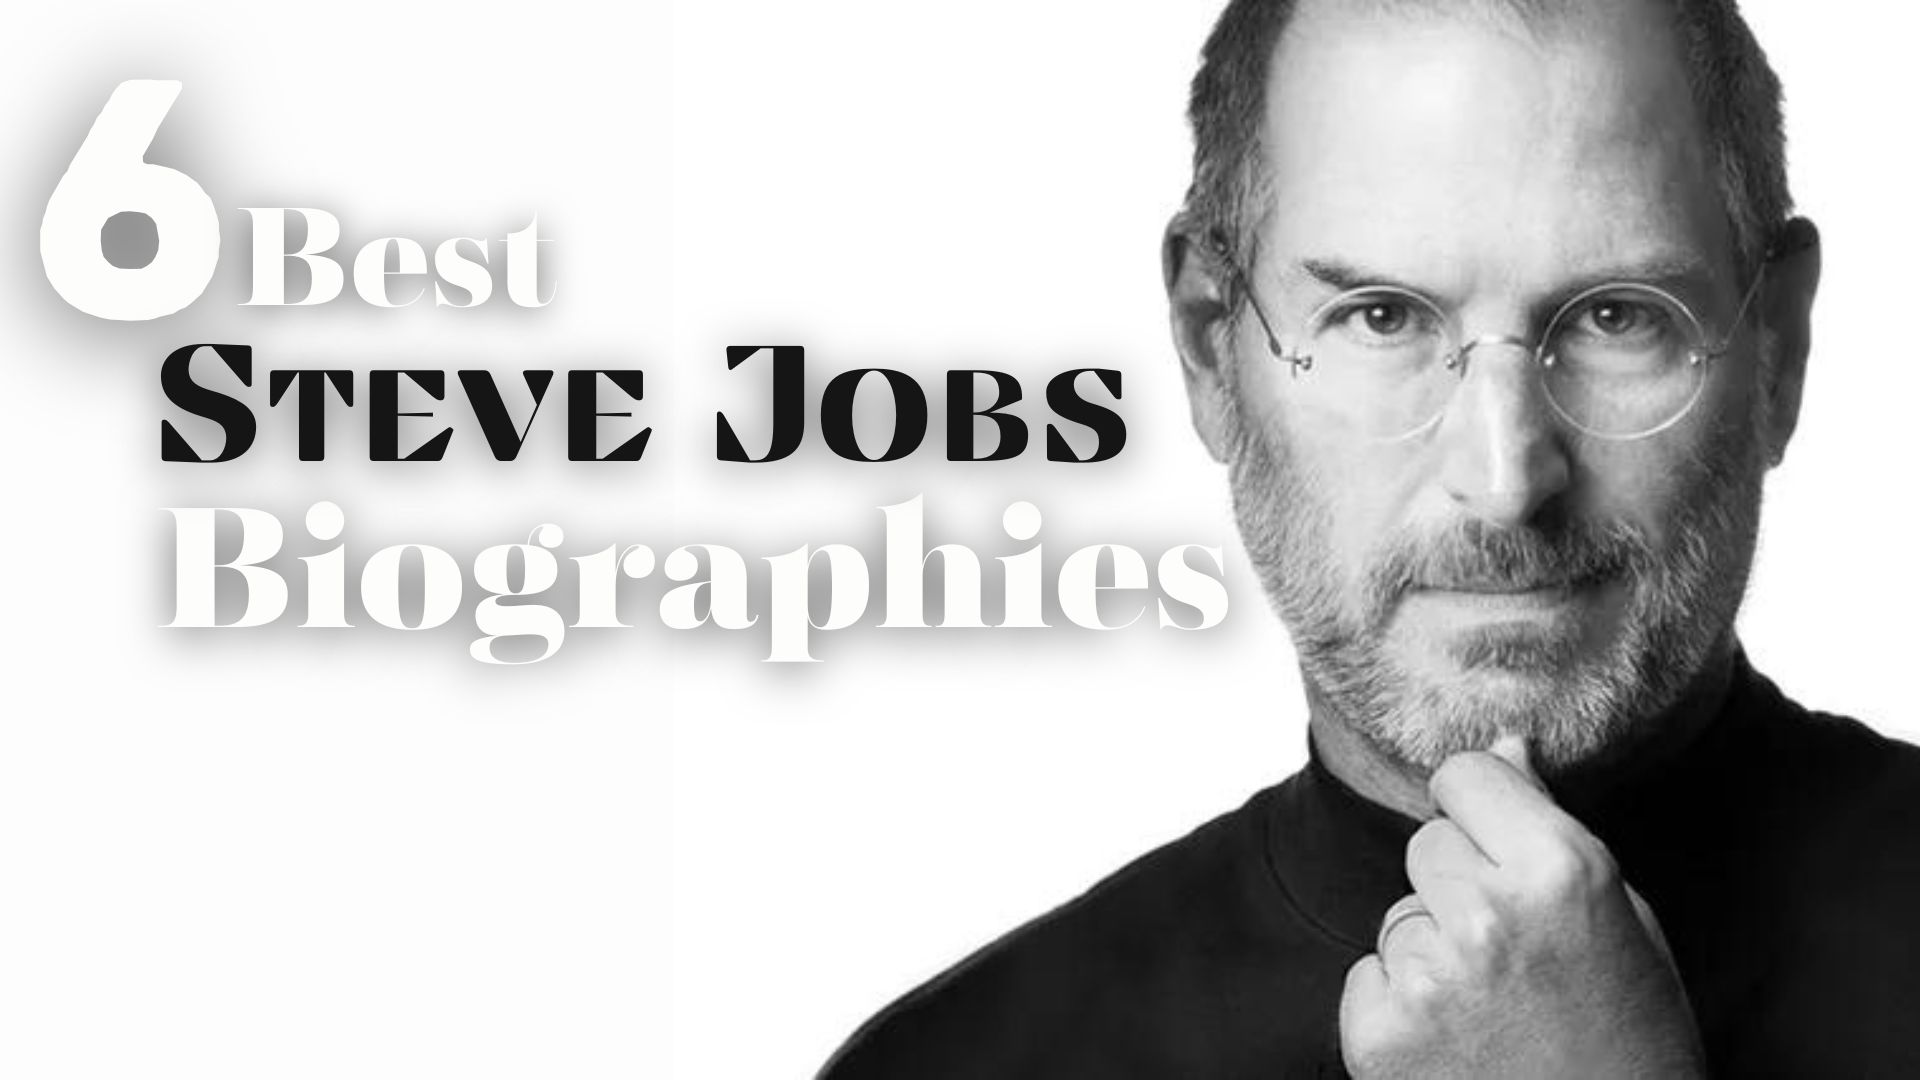 6 Best Steve Jobs Biographies